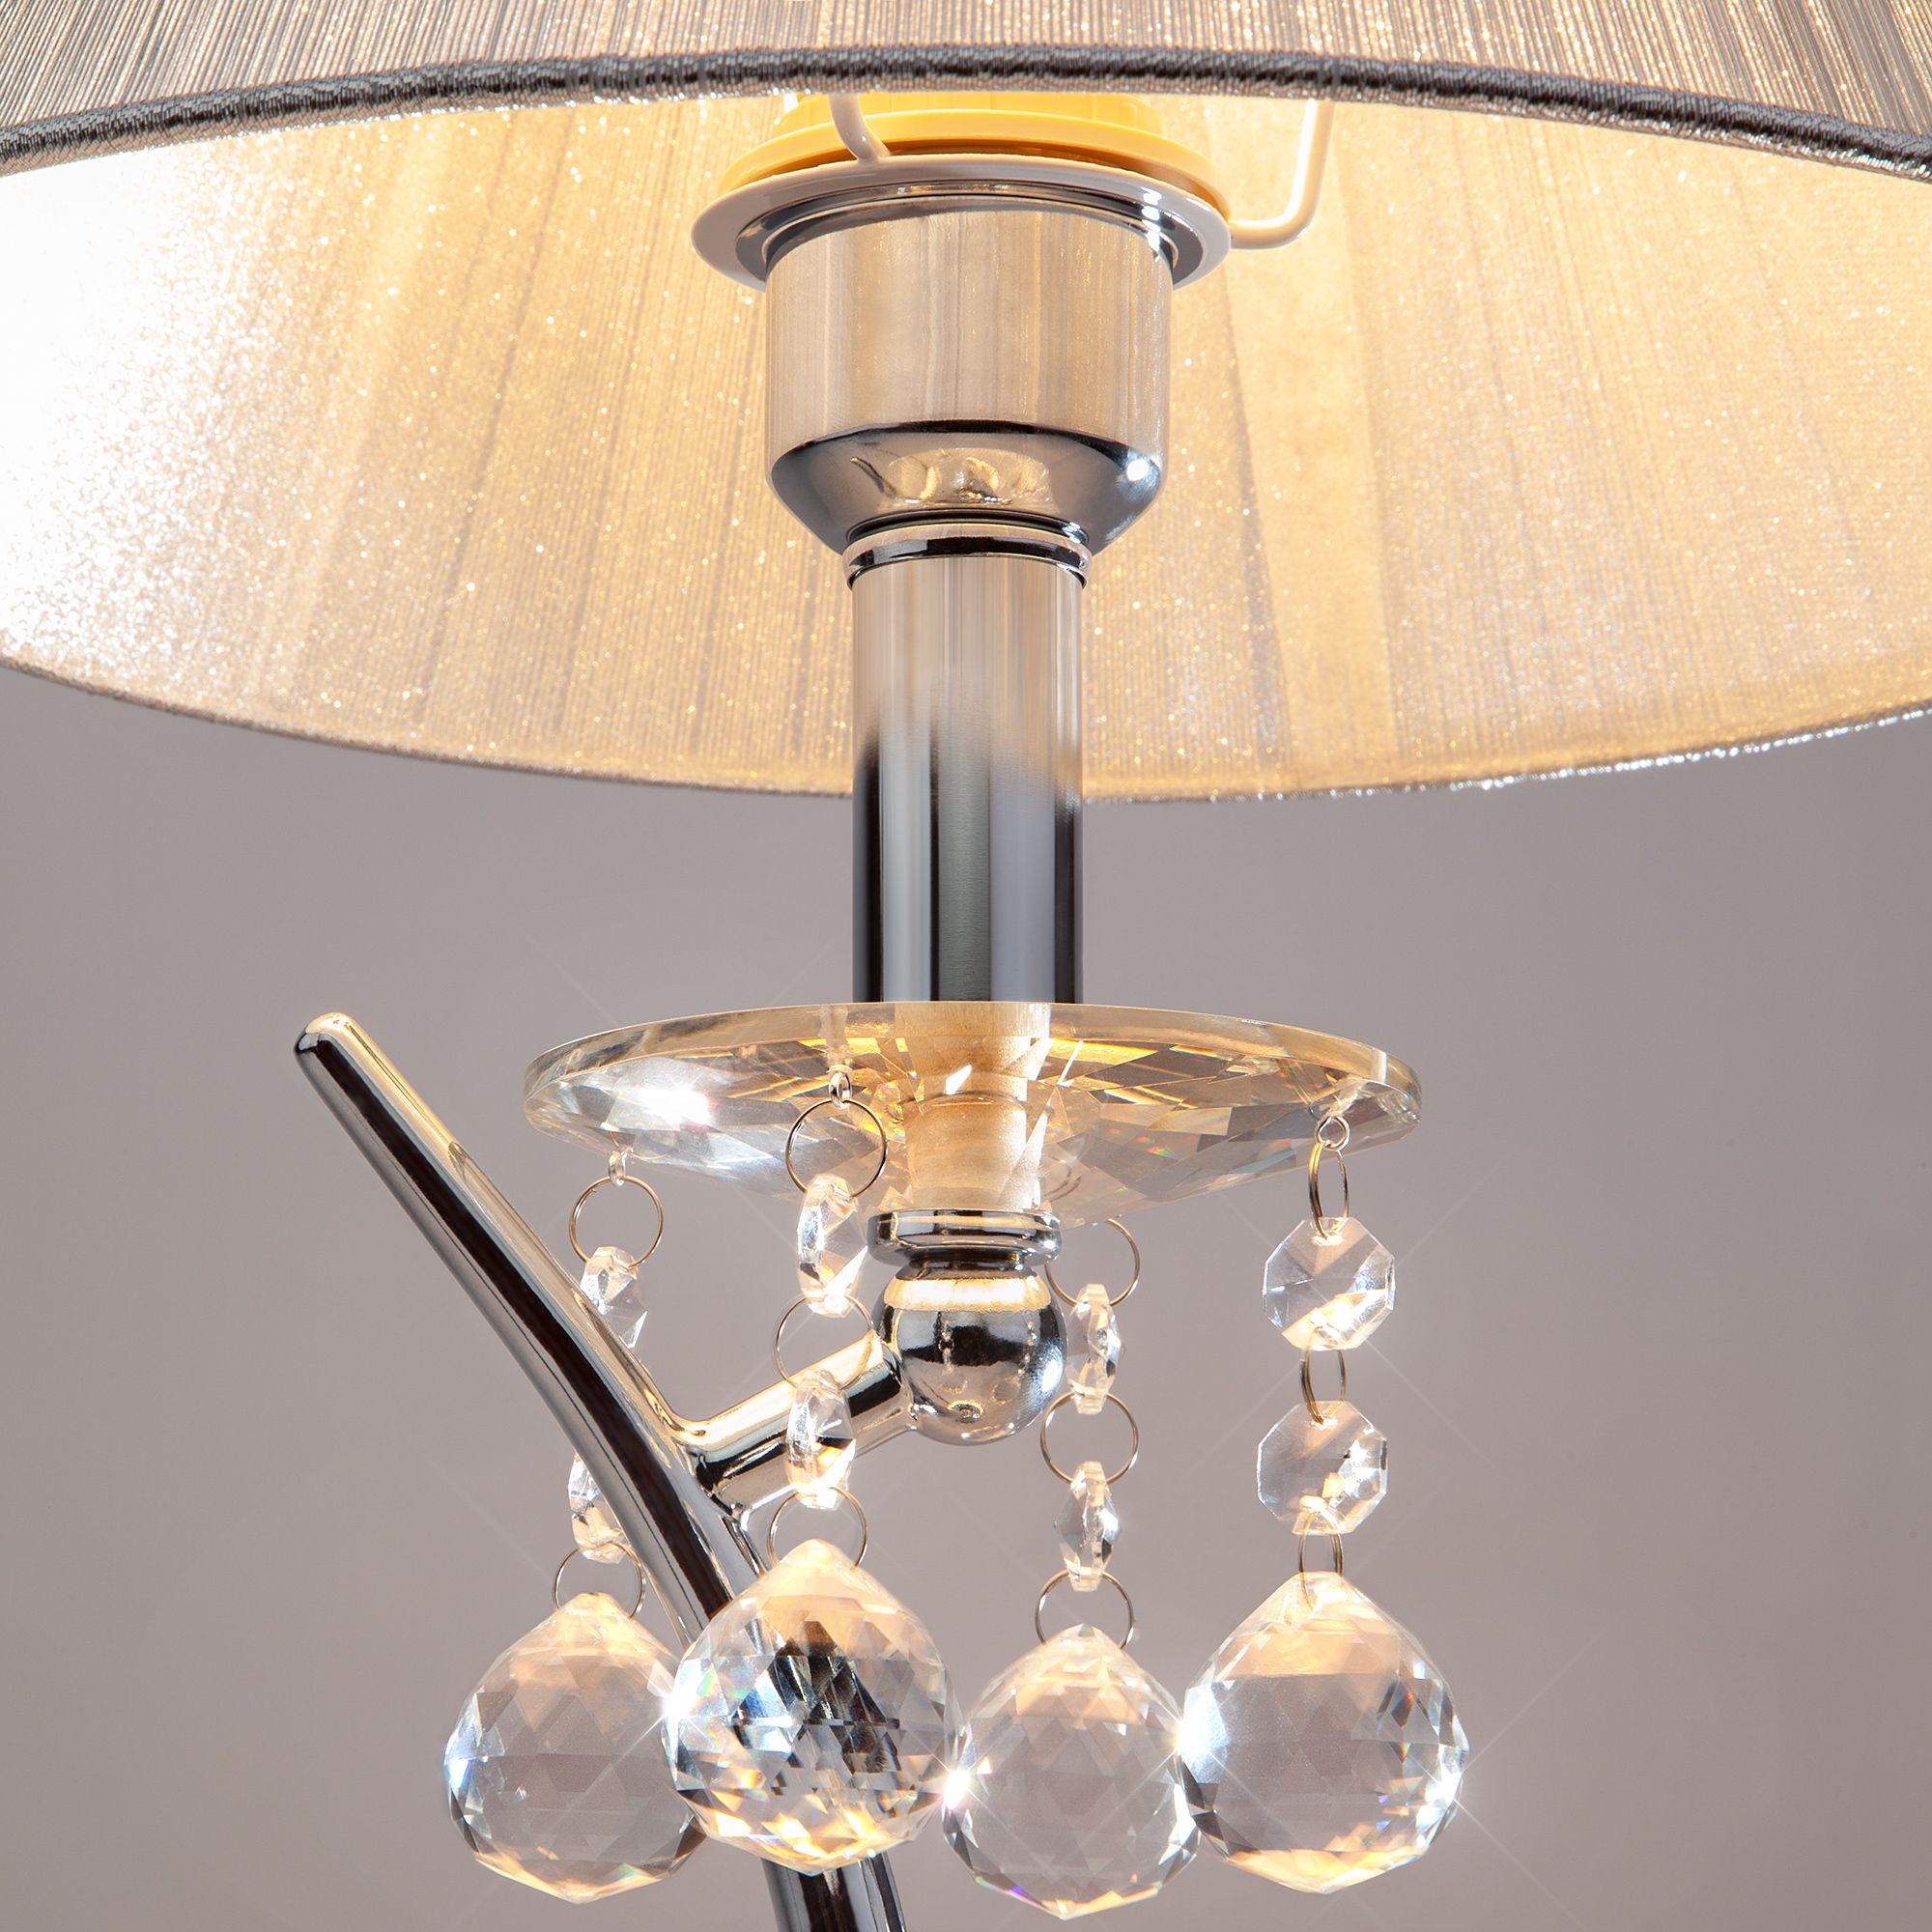 Классическая настольная лампа Eurosvet Odette 1087/1 хром. Фото 2